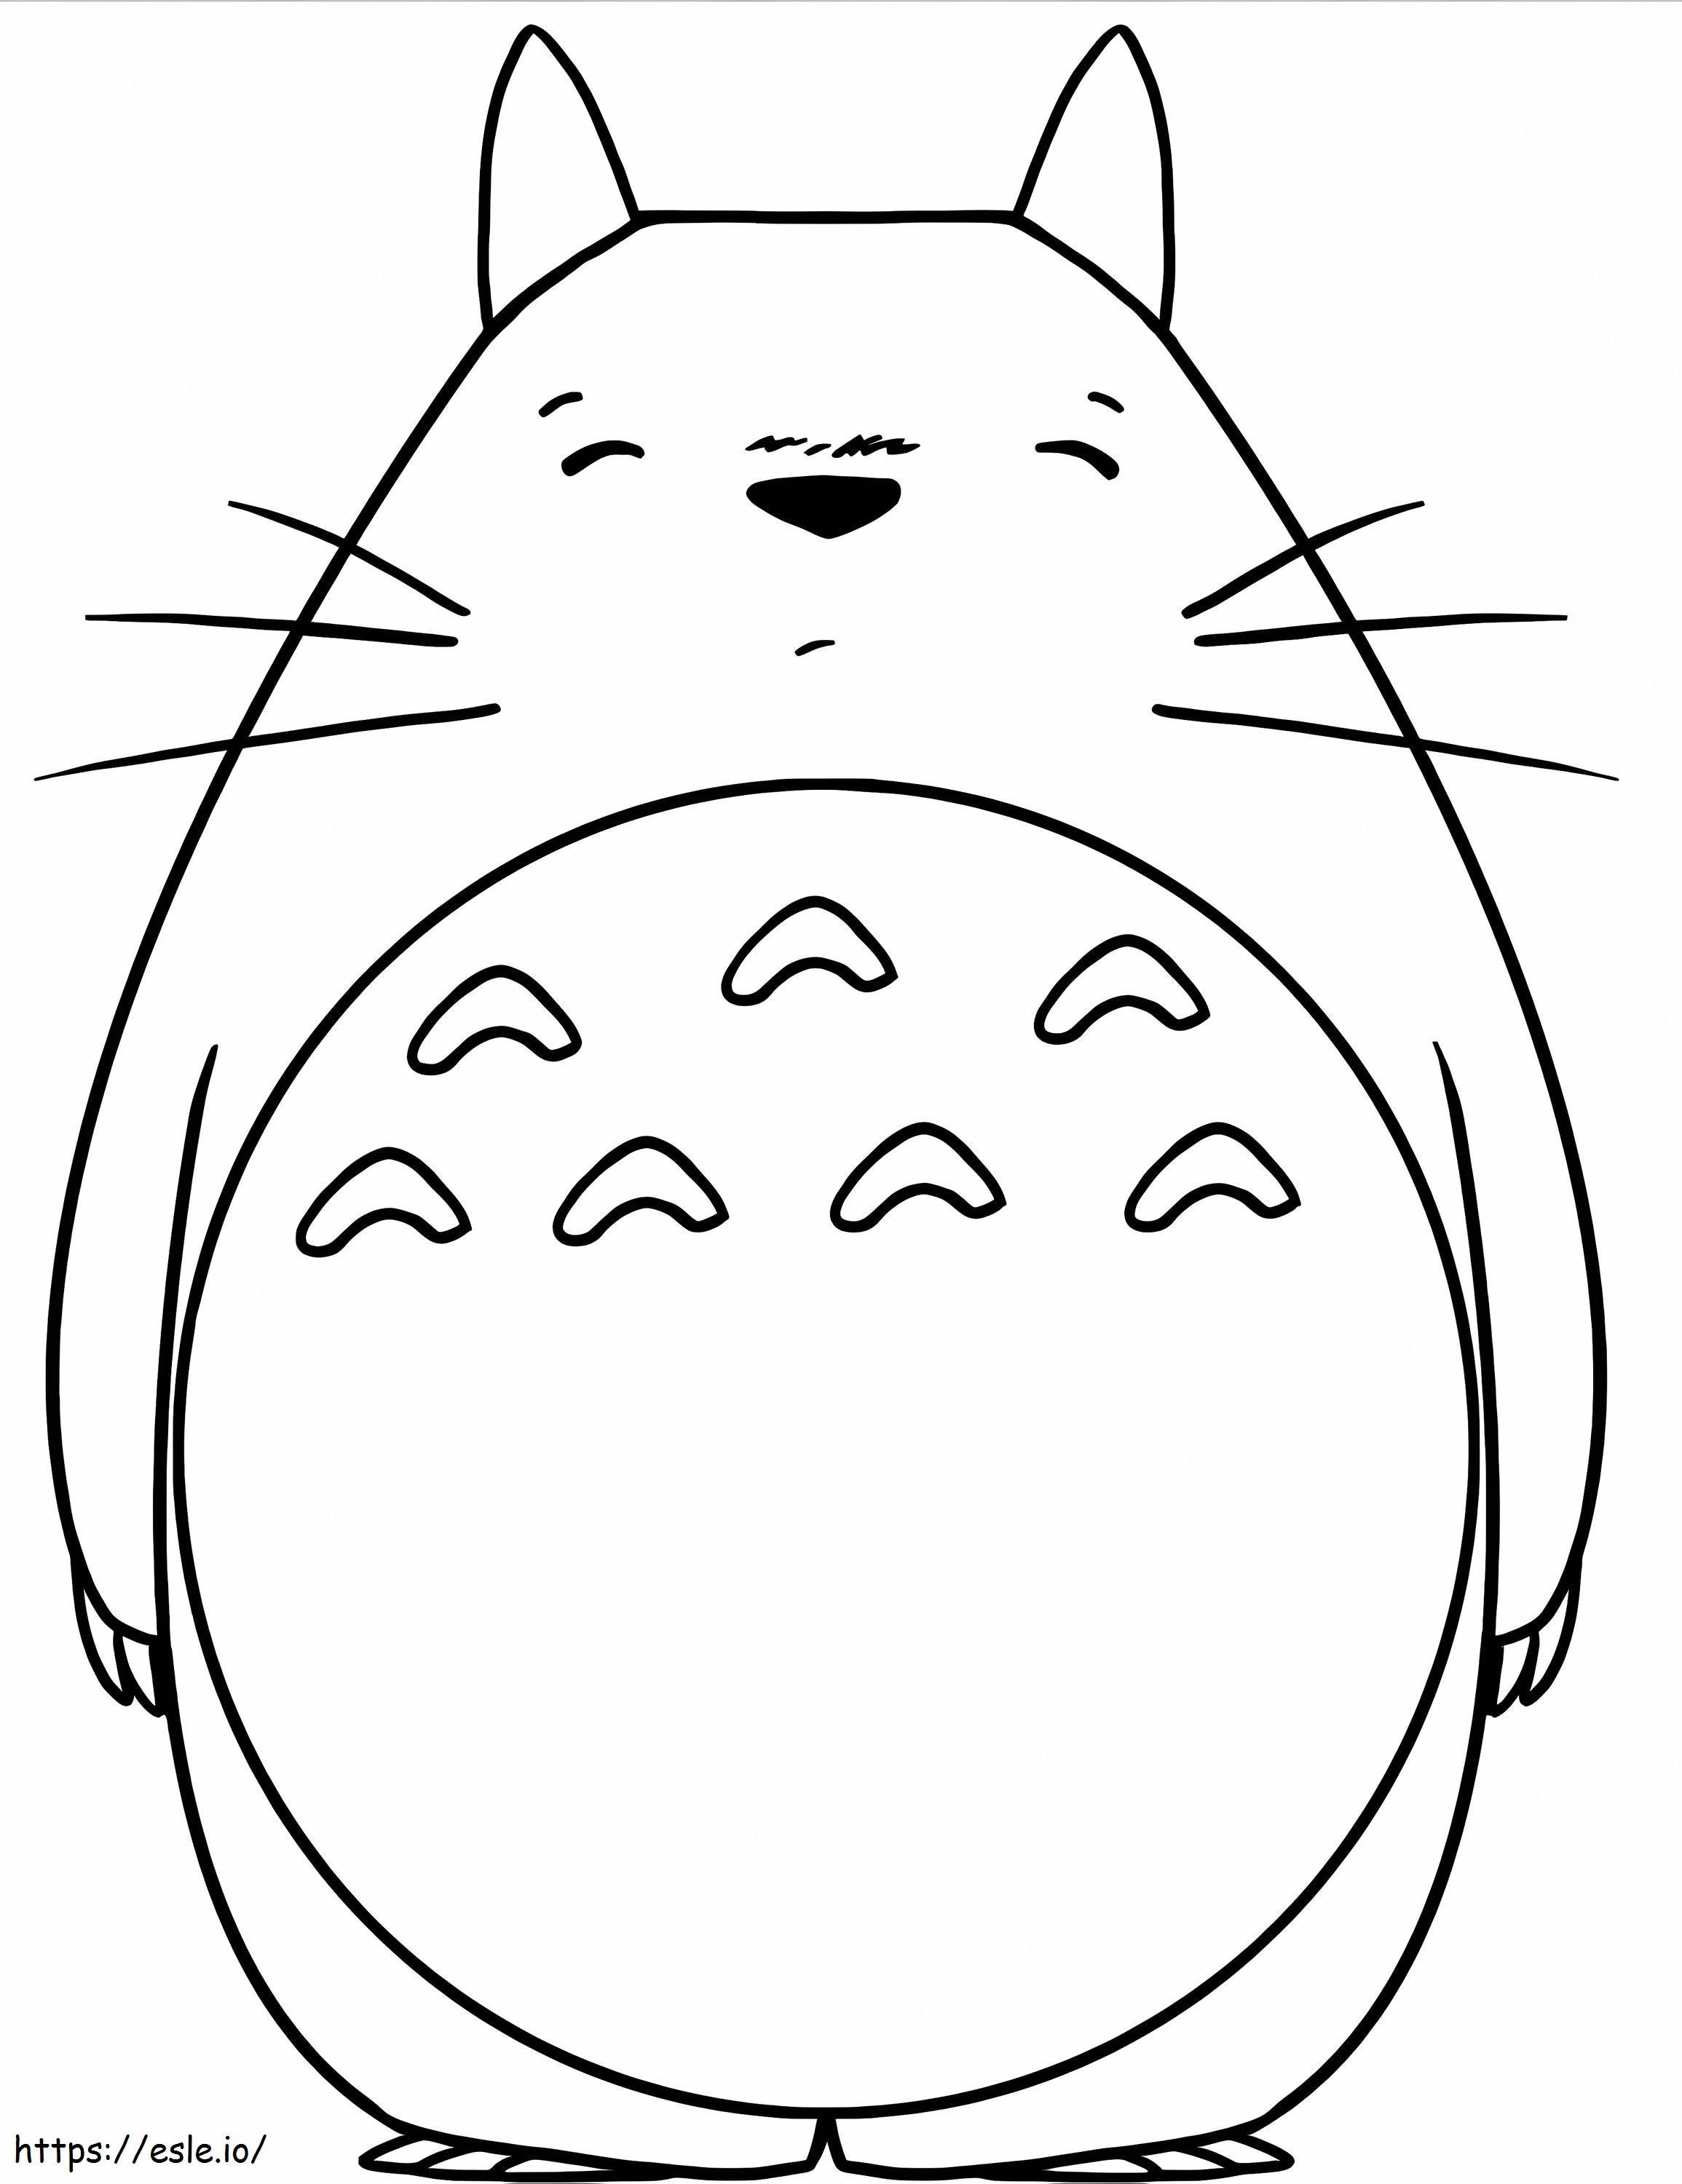 Sleeping Totoro coloring page